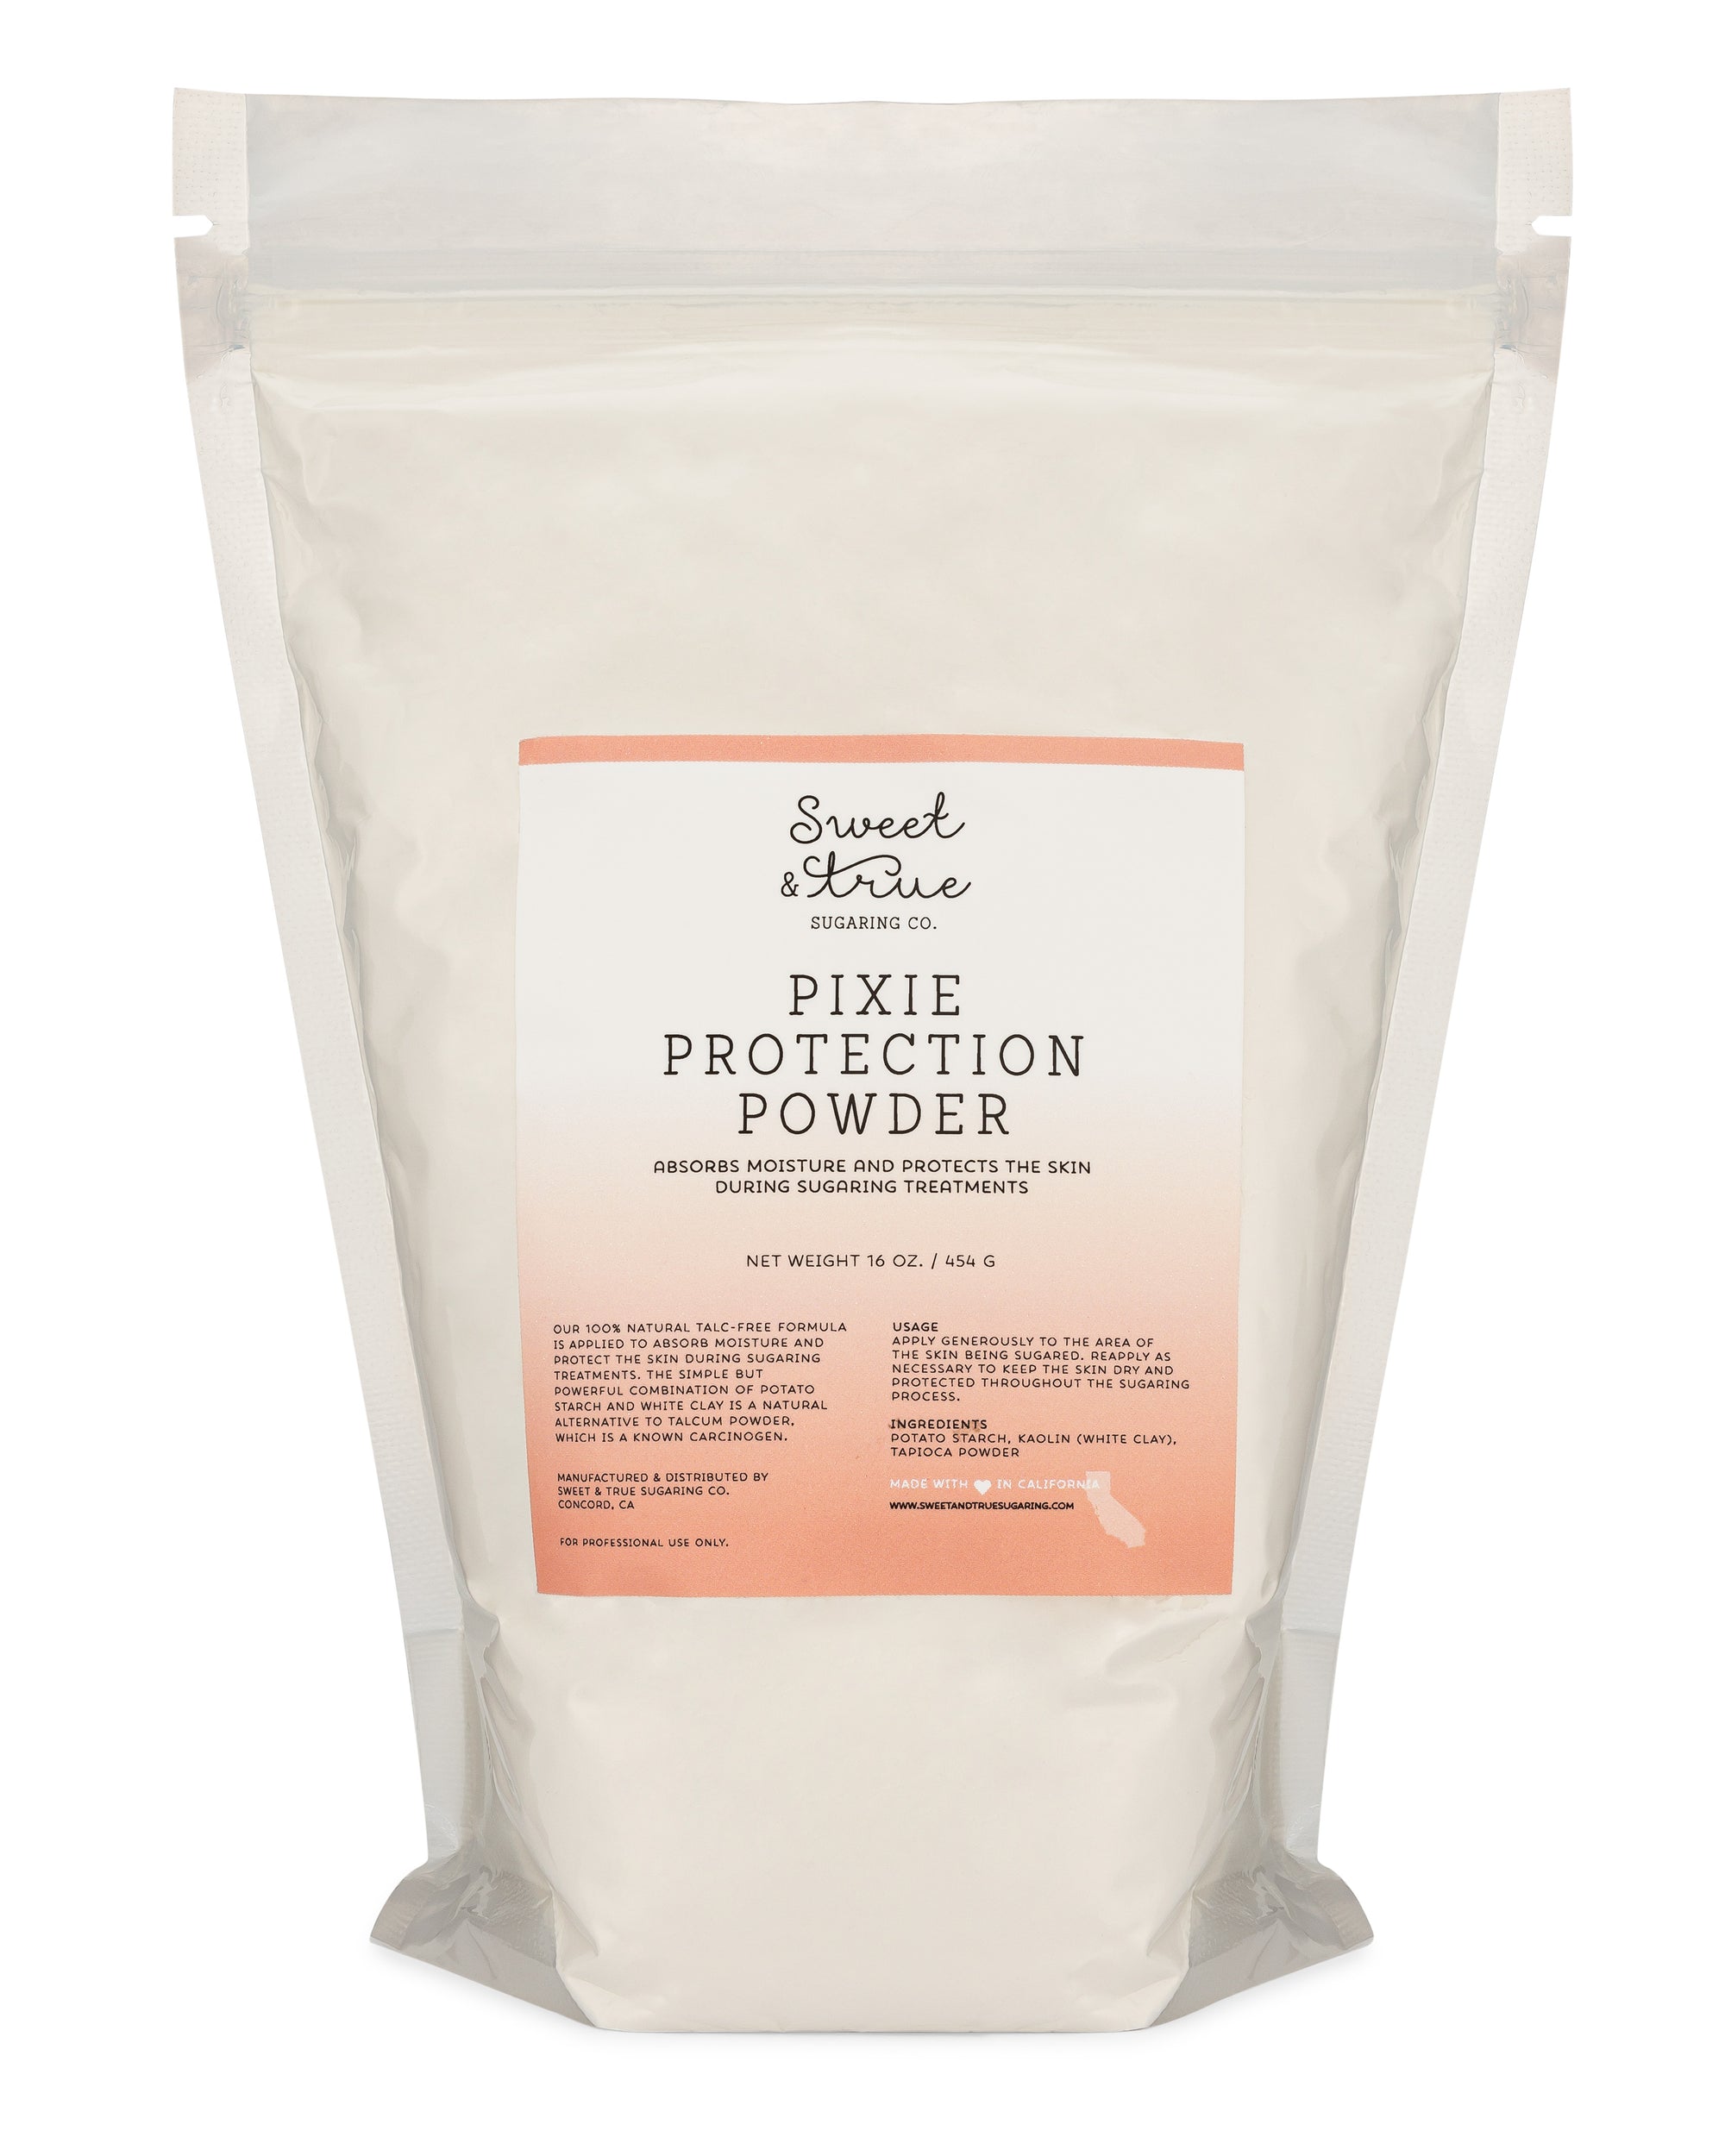 Pixie Protection Powder Refill Pouch (16oz.)